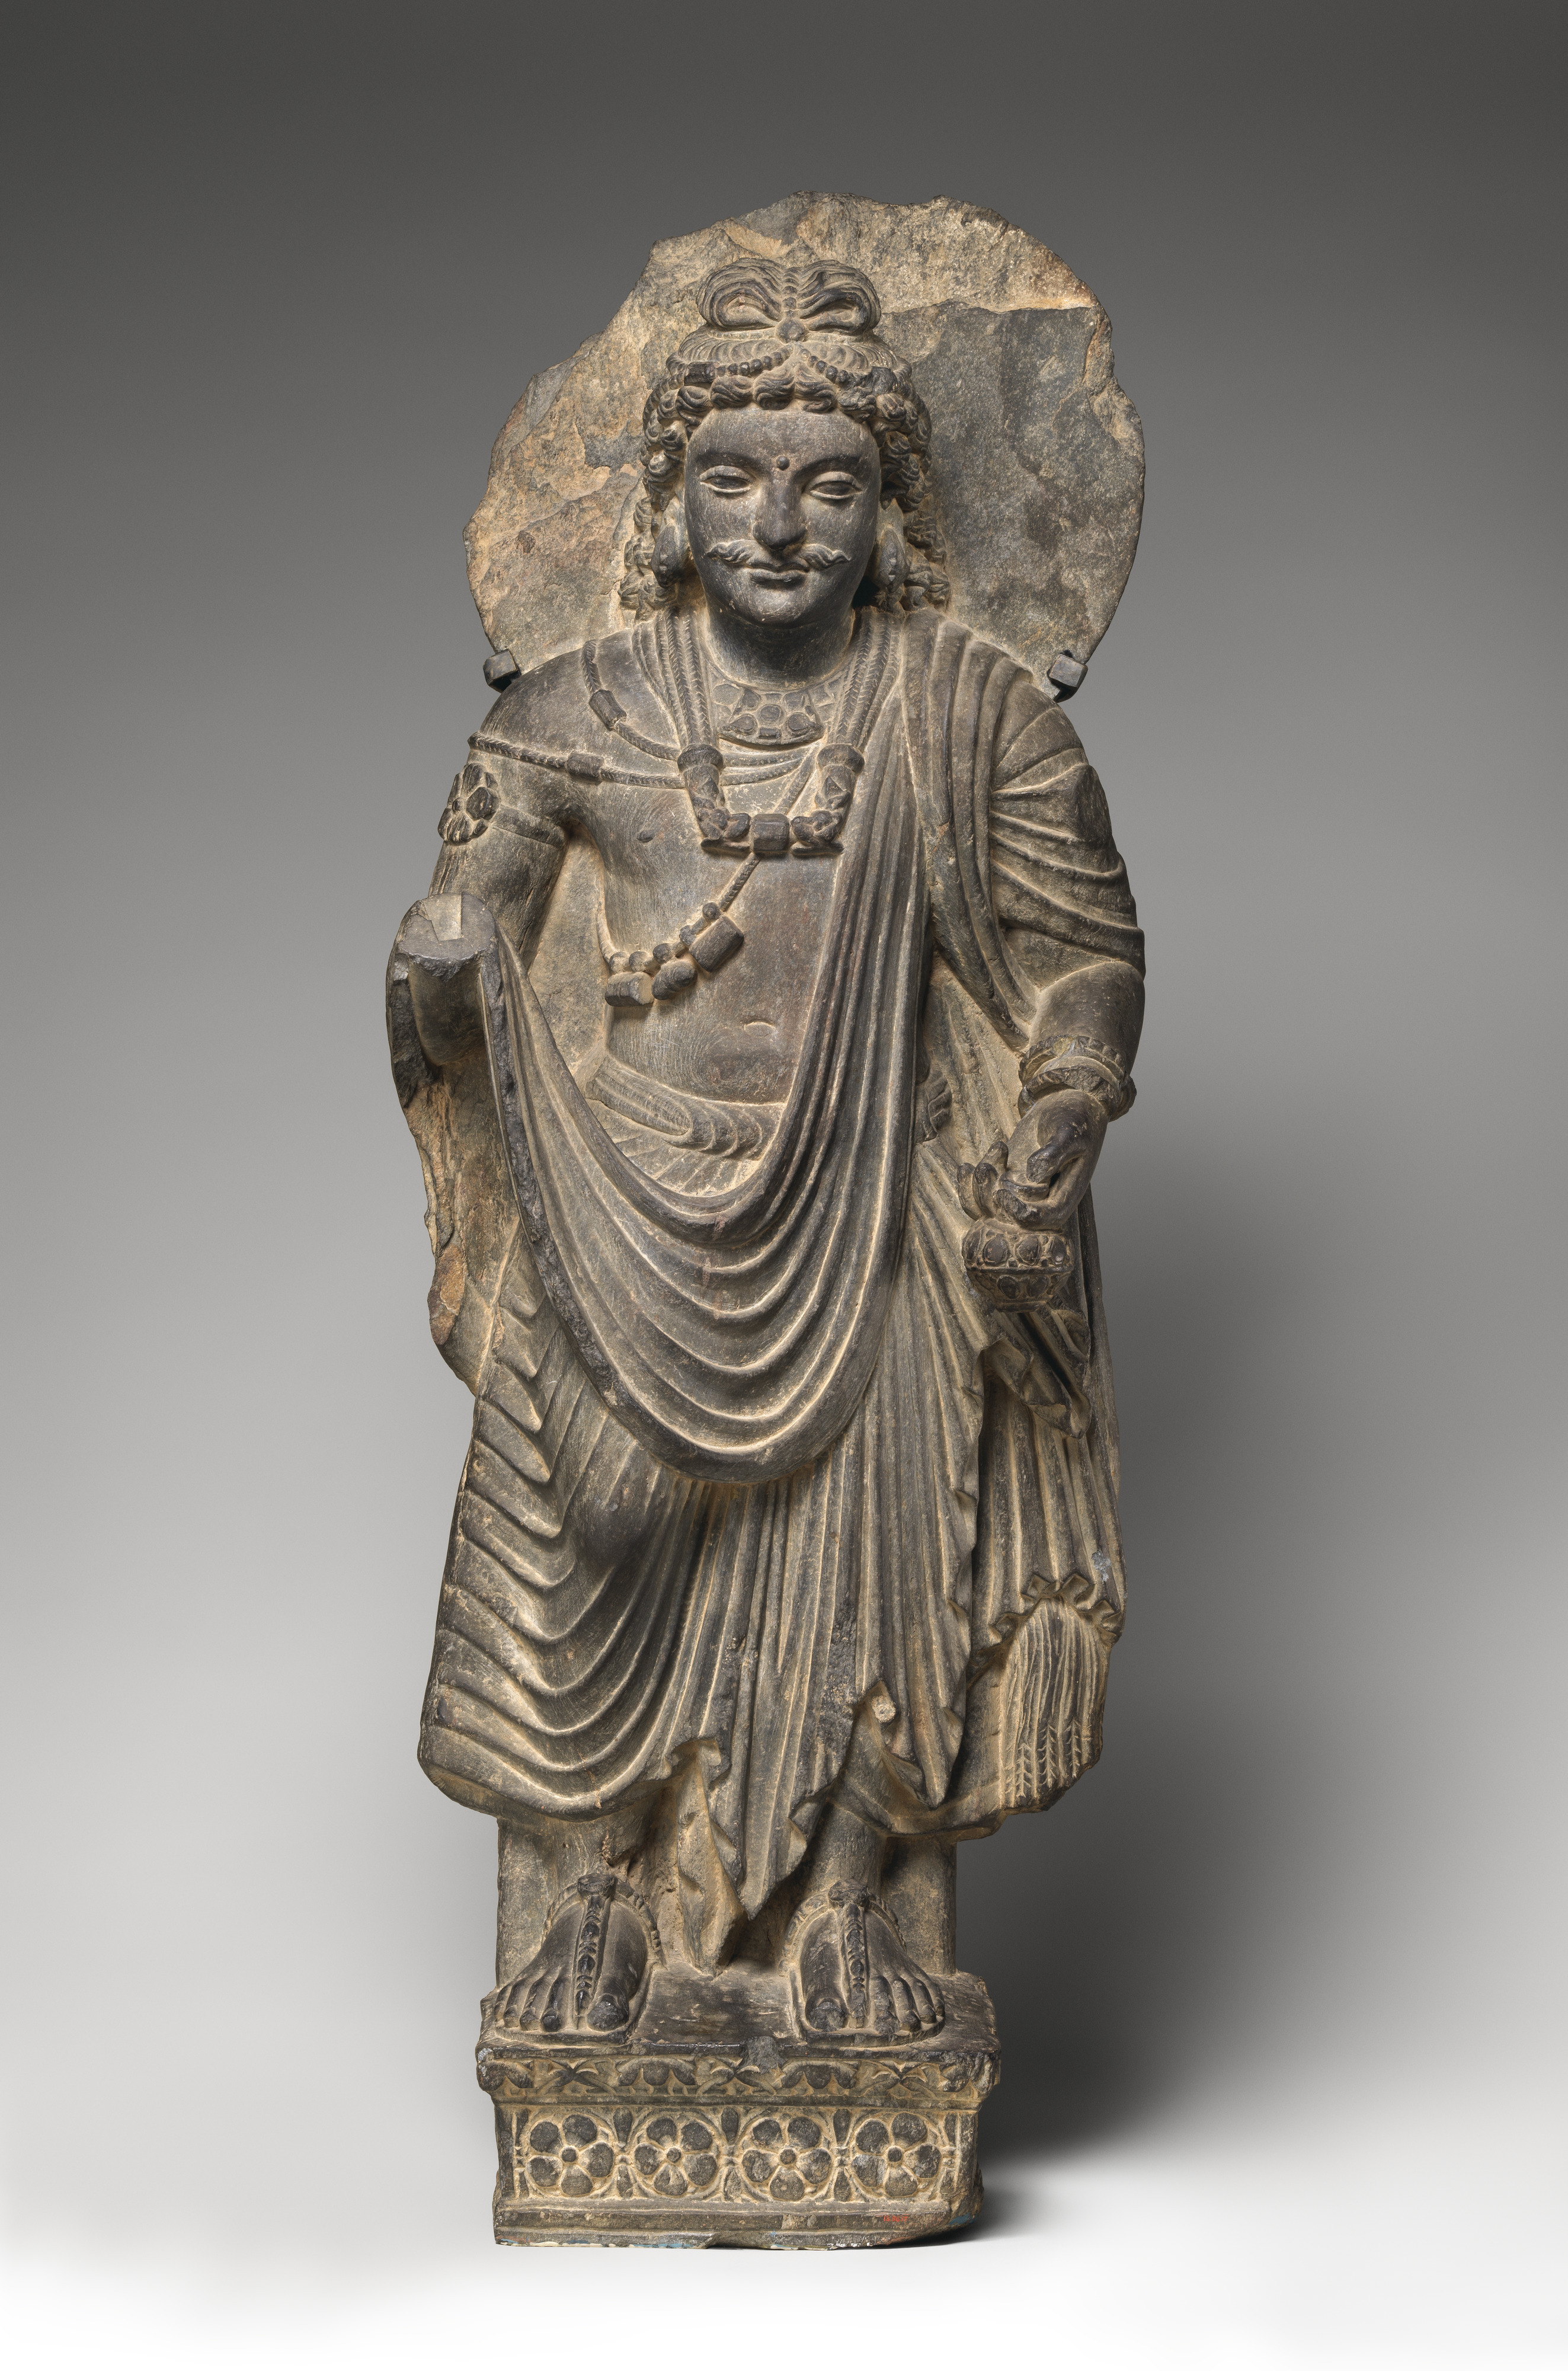 Standing Bodhisattva Maitreya (Buddha of the Future), c. 3rd century, Pakistan (ancient region of Gandhara), schist, 80.7 cm high (The Metropolitan Museum of Art)